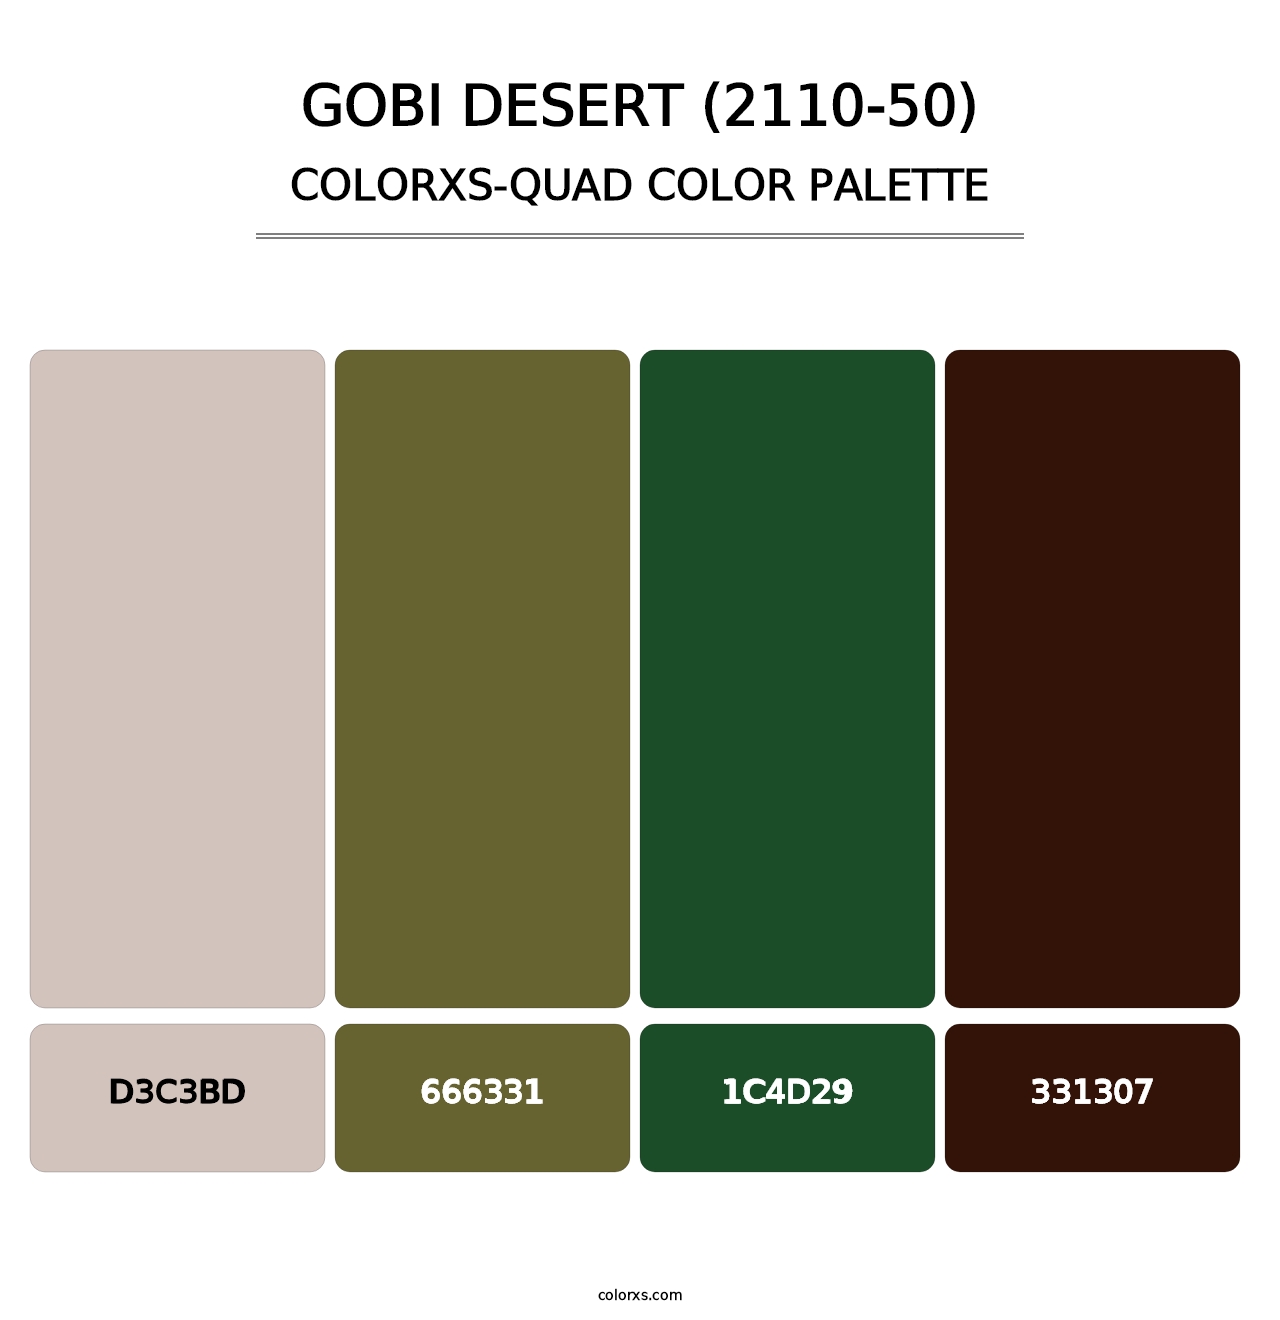 Gobi Desert (2110-50) - Colorxs Quad Palette